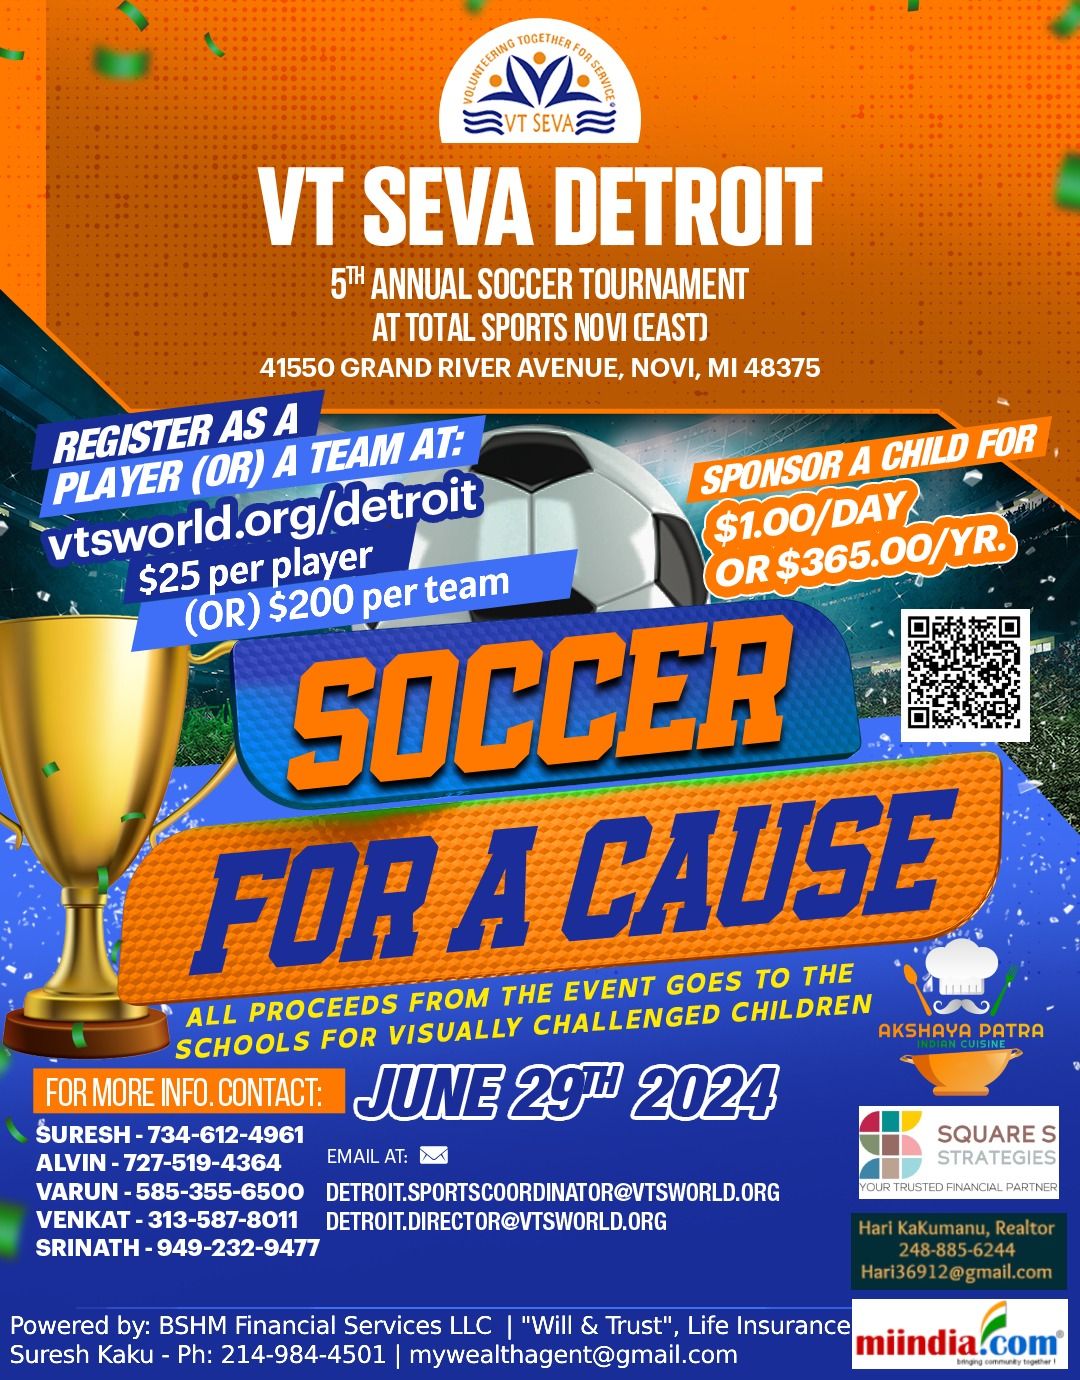 VT Seva Detroit 5th Annual Soccer Tournament for a Cause